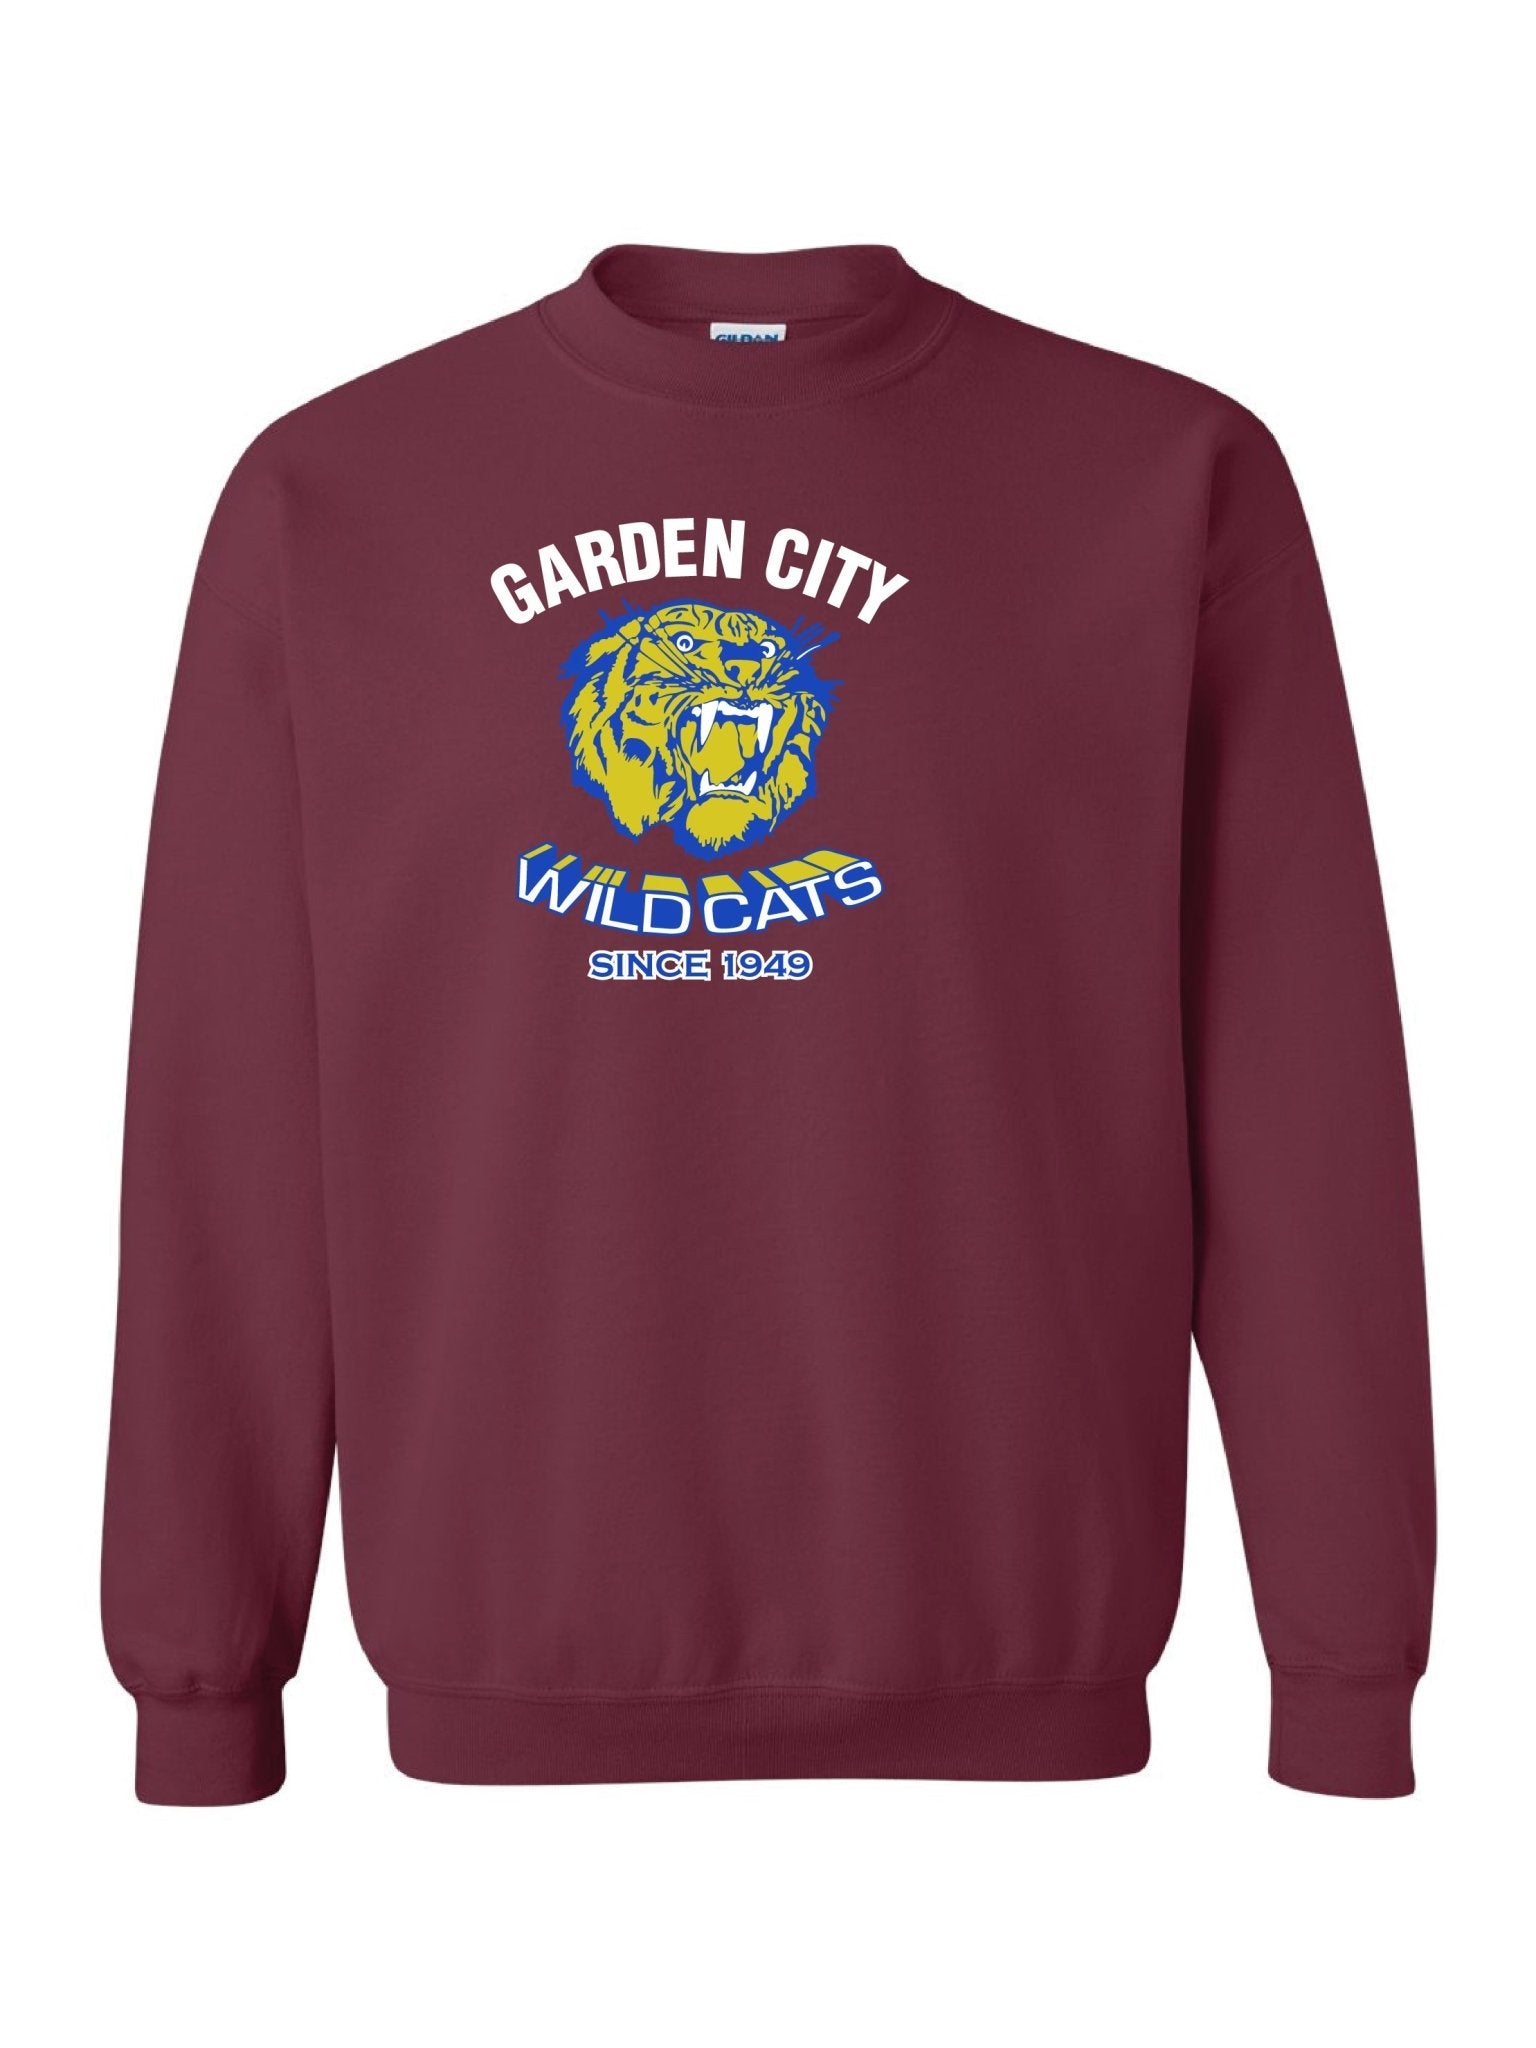 Youth Garden City Wildcats Since 1949 Crewneck Sweatshirt - Oddball Workshop